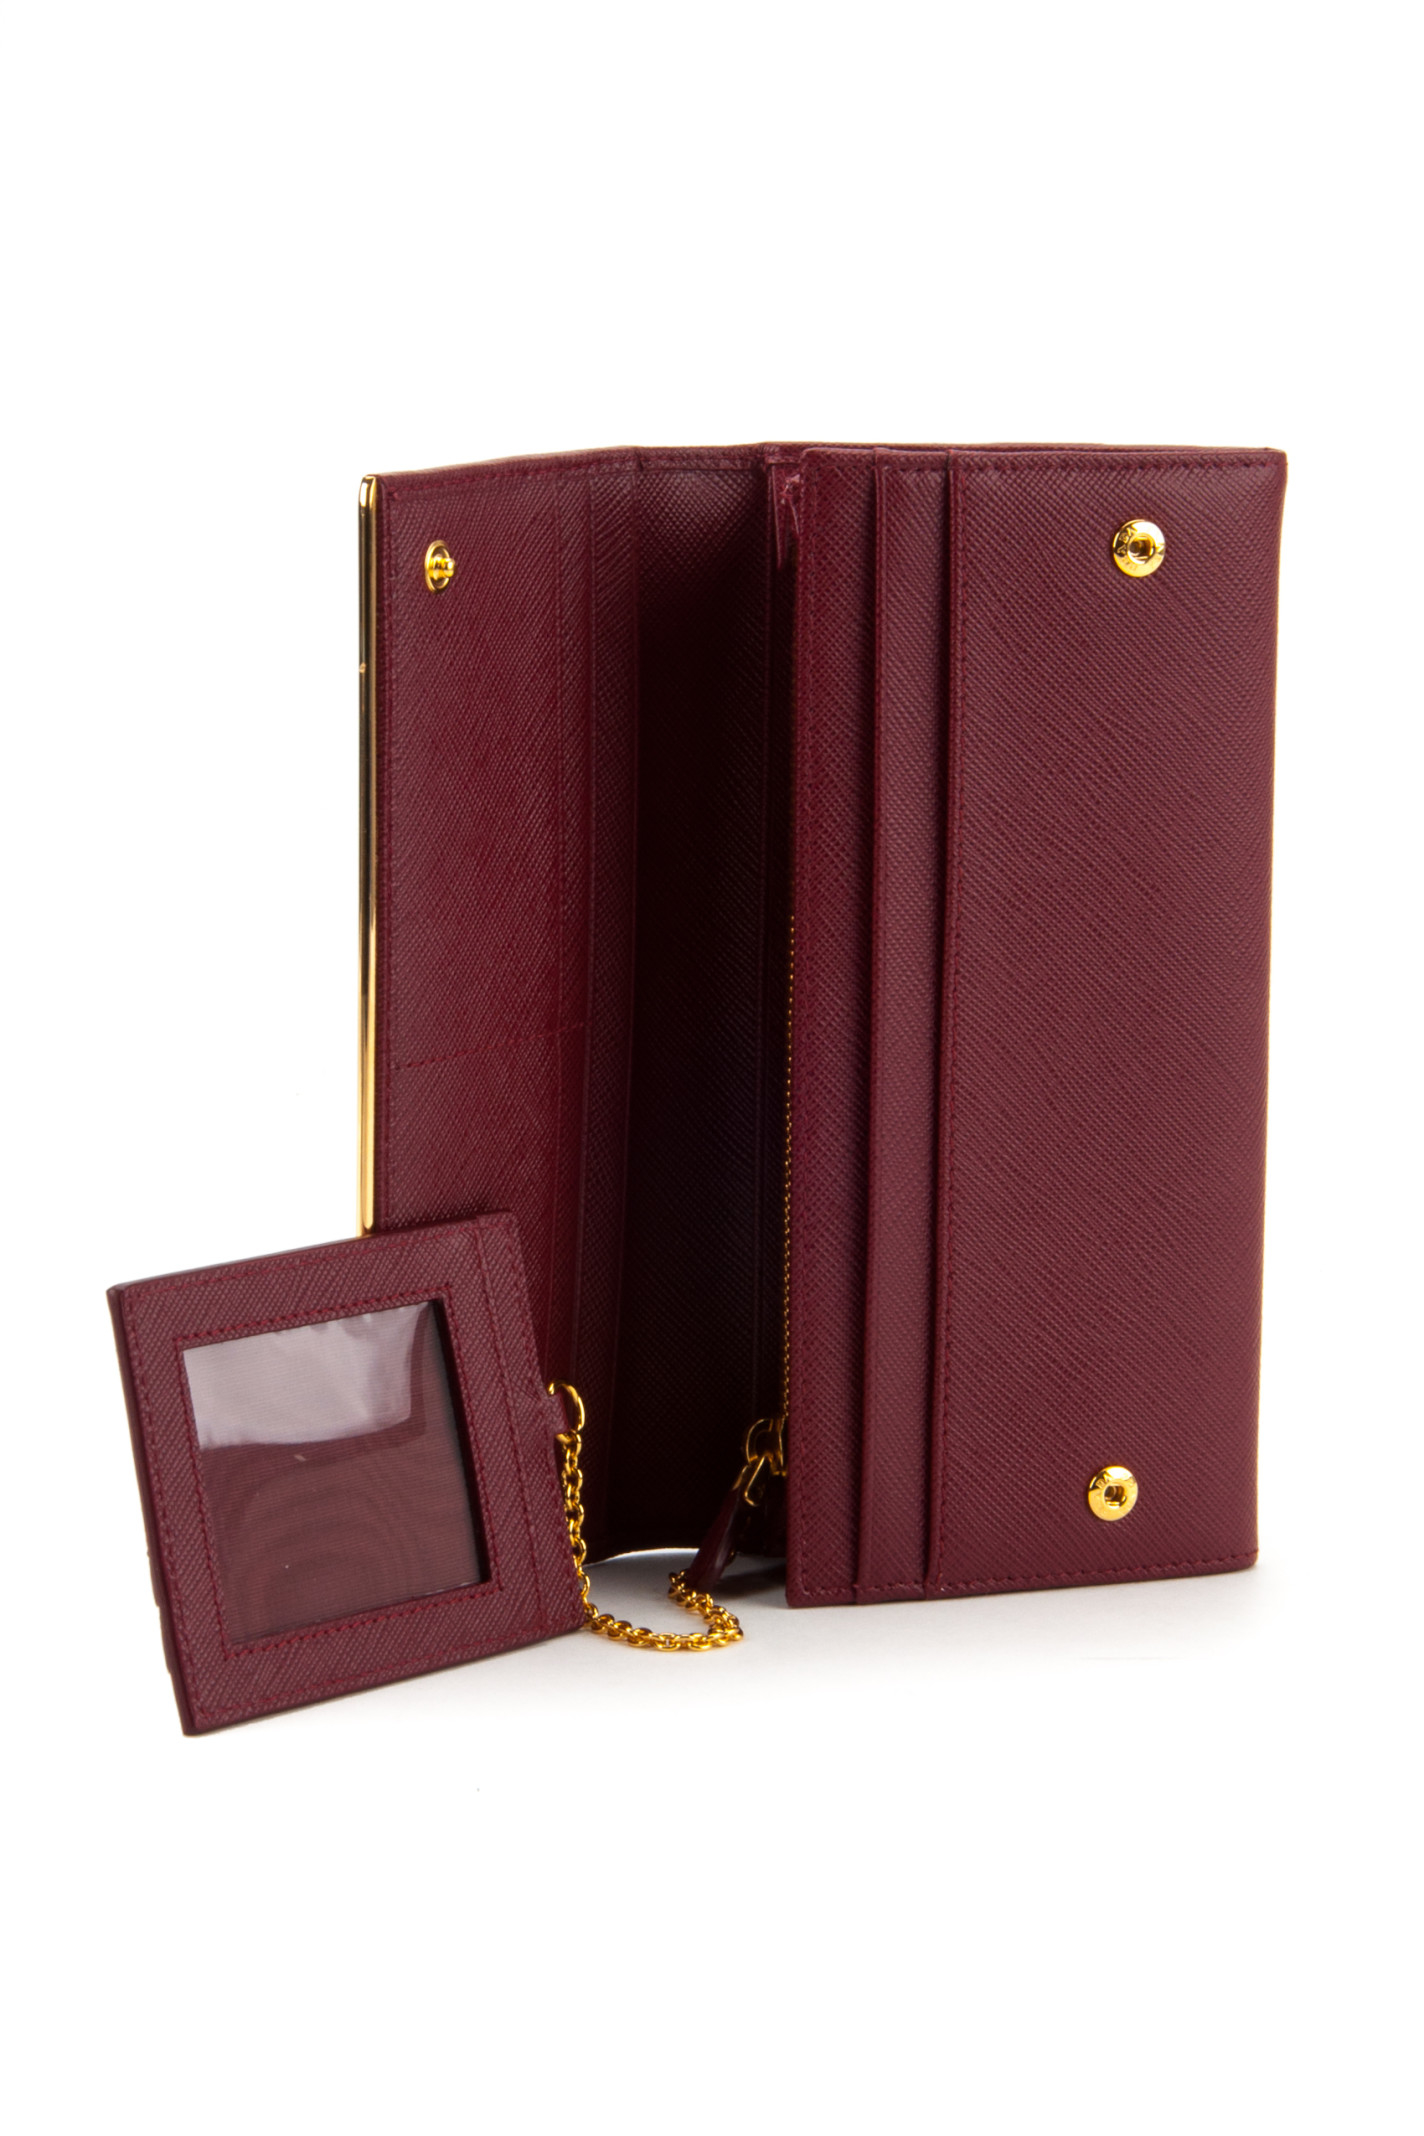 Prada Saffiano Metal Wallet in Red (CERISE) | Lyst  